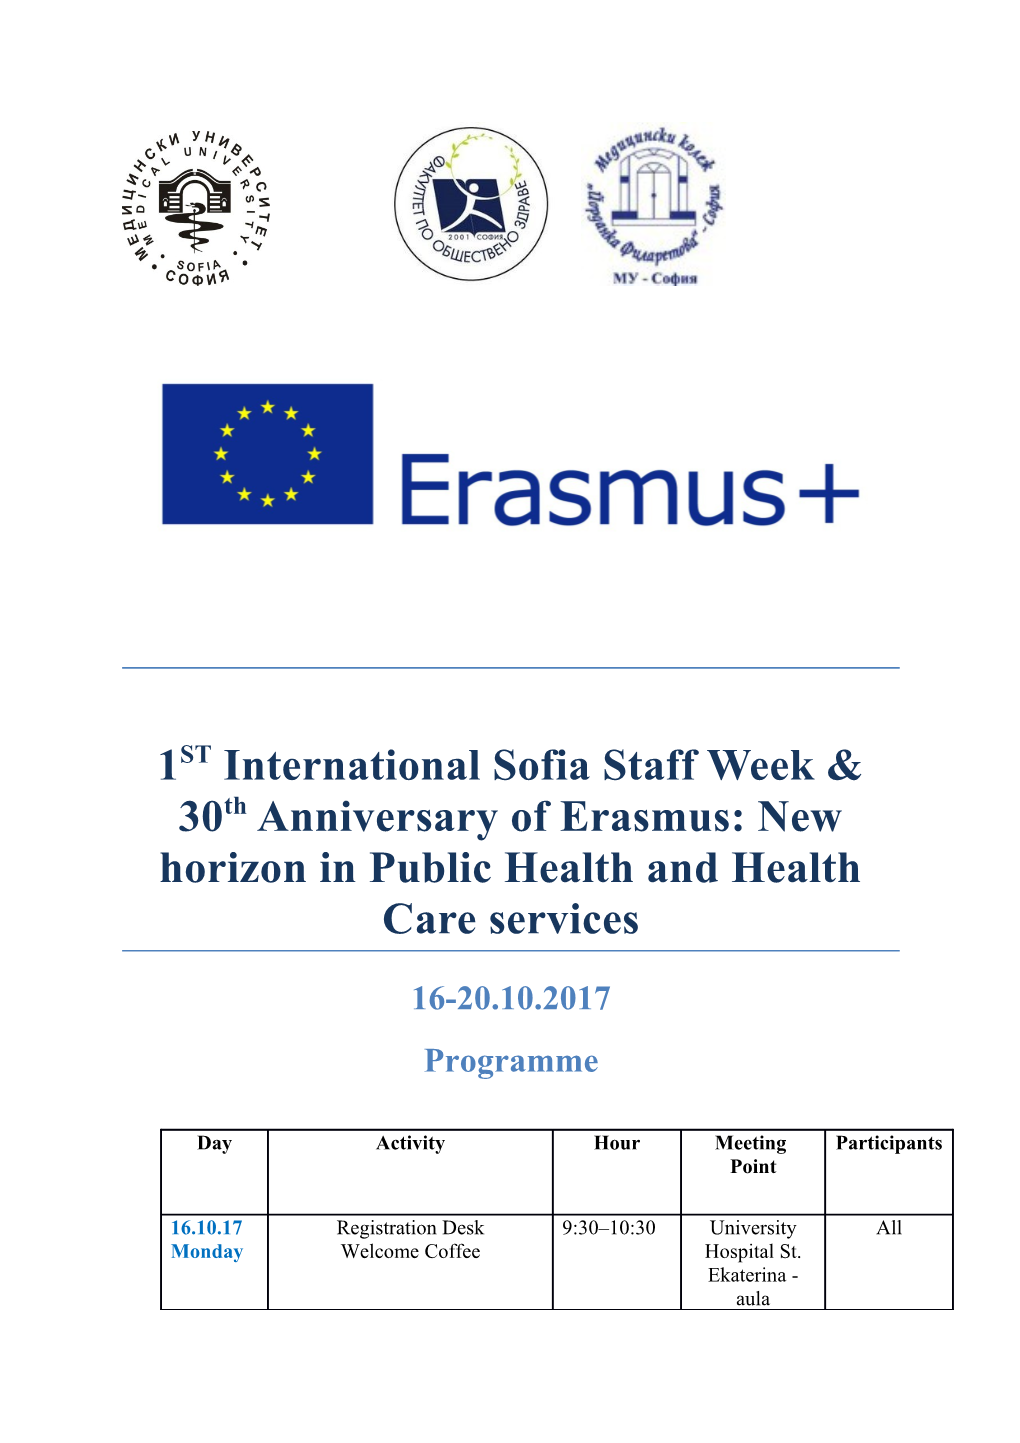 1ST International Sofia Staff Week & 30Th Anniversary of Erasmus: New Horizon in Public